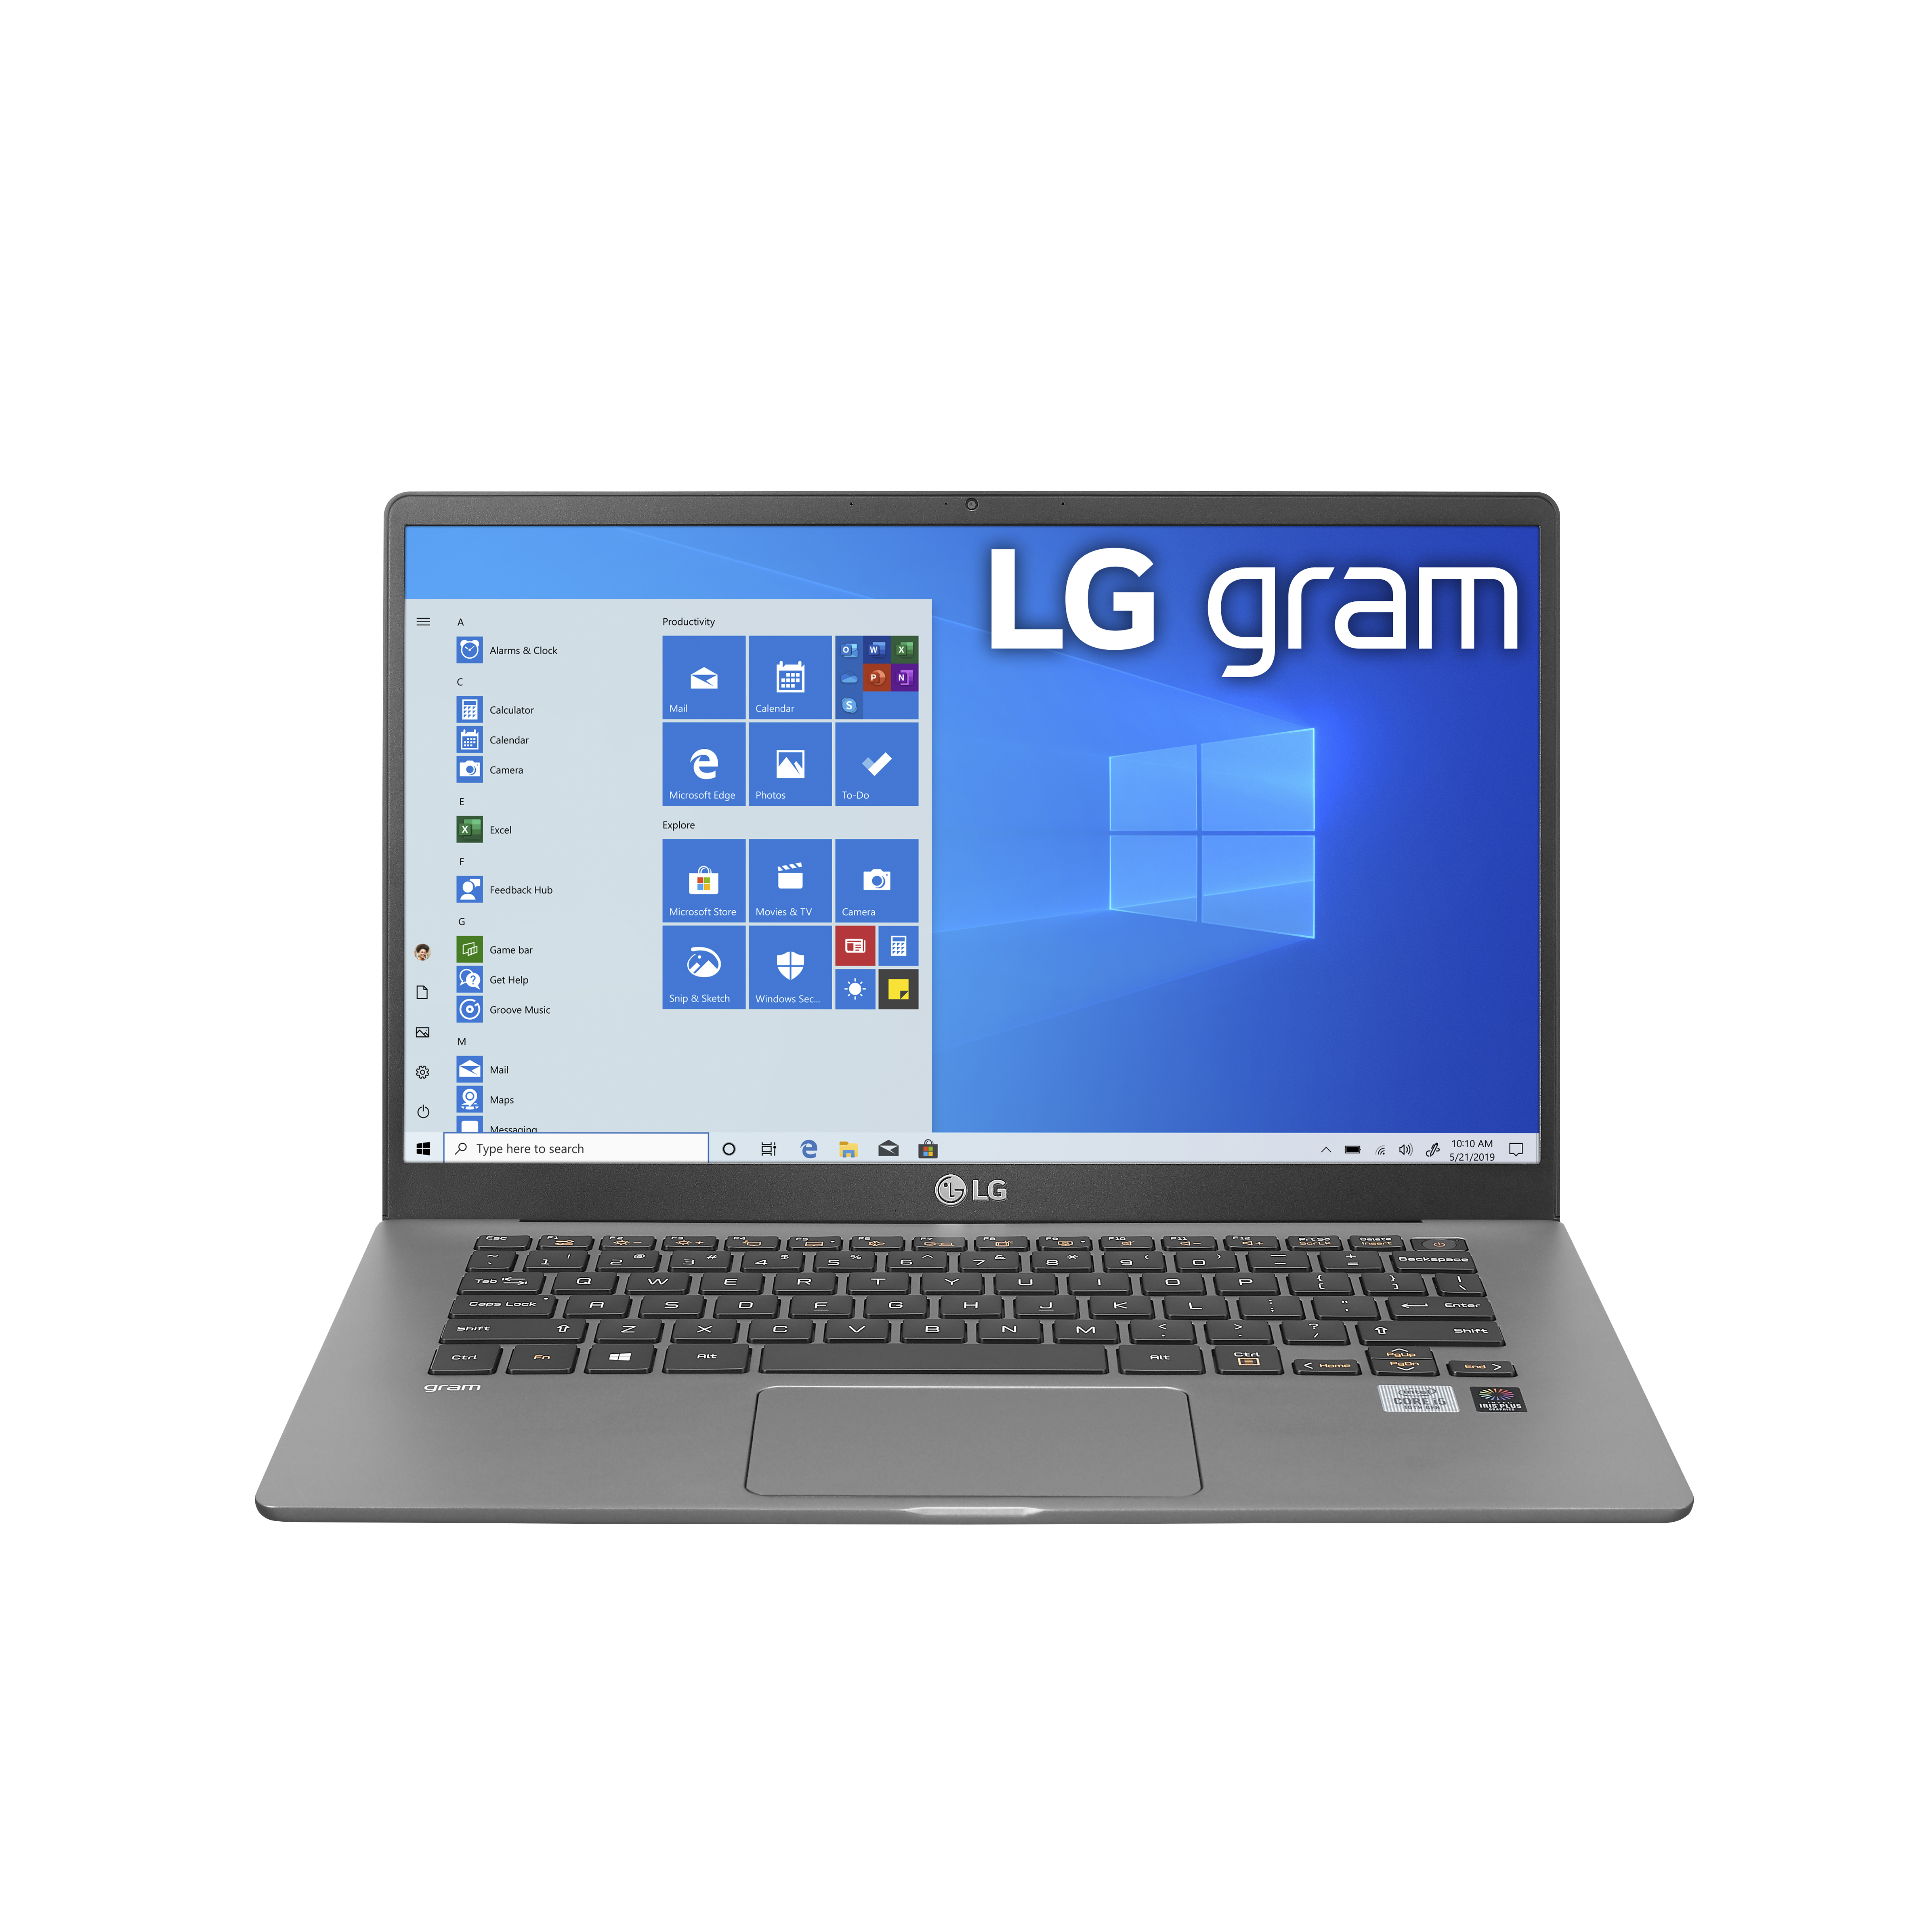 LG gram 14 inch Ultra-Lightweight Laptop with 10th Gen Intel Core Processor w/Intel Iris Plus - 14Z90N-U.AAS7U1 - image 1 of 13